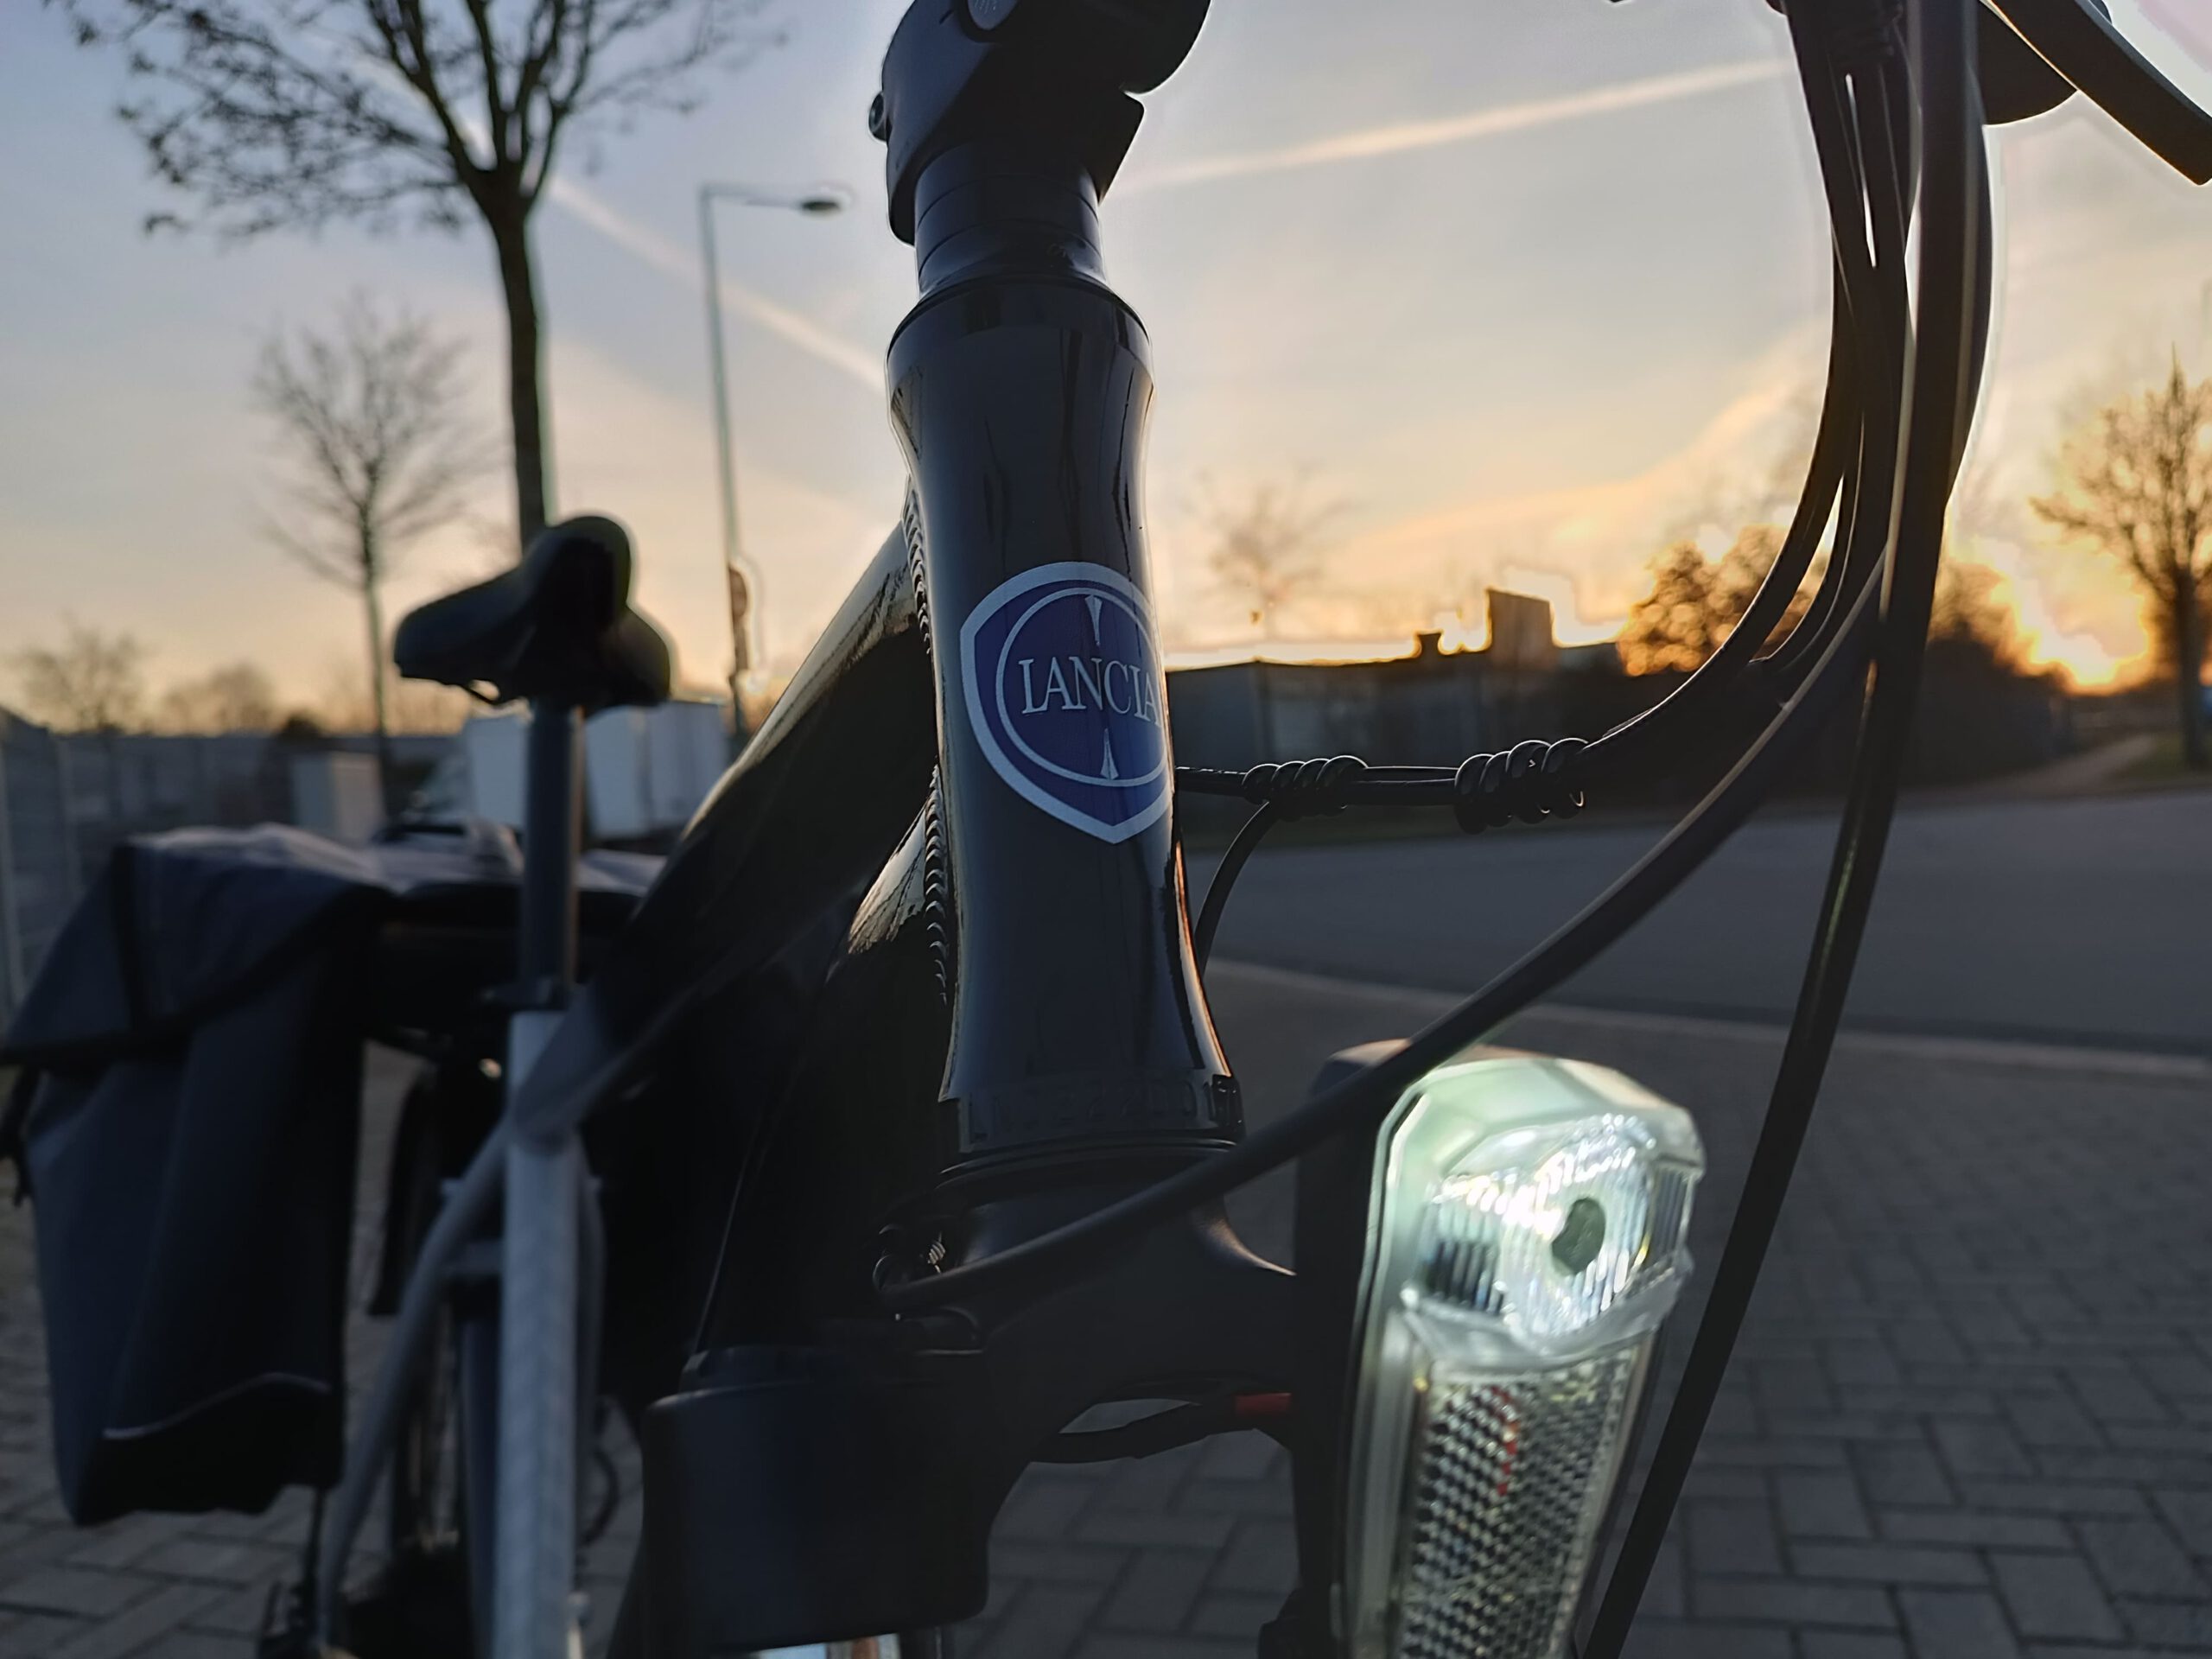 Beleuchtung im Lancia E-Bike Test